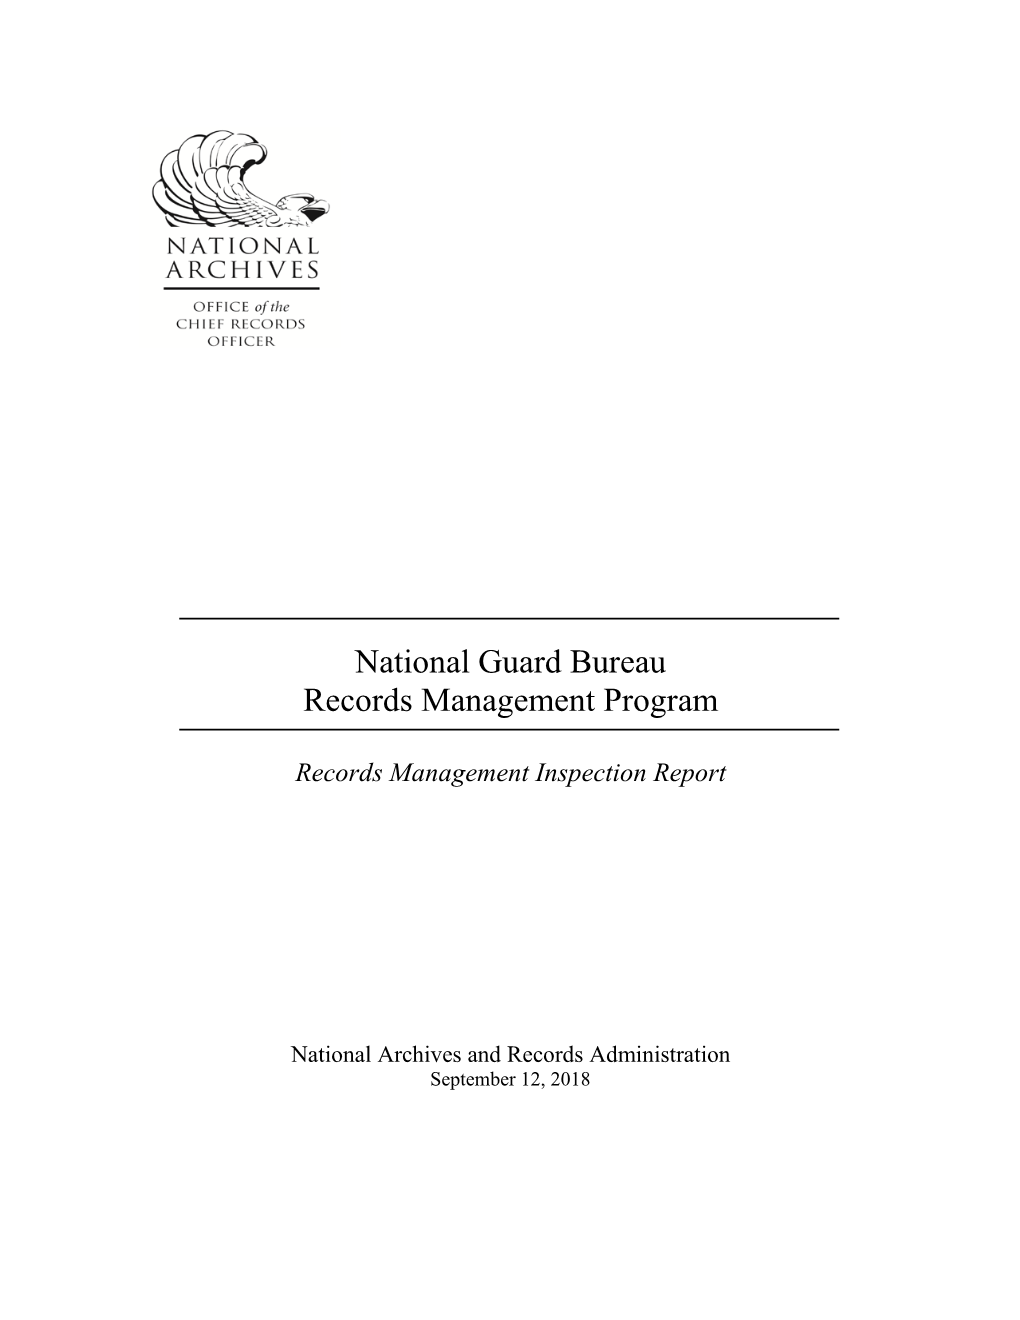 National Guard Bureau Records Management Program